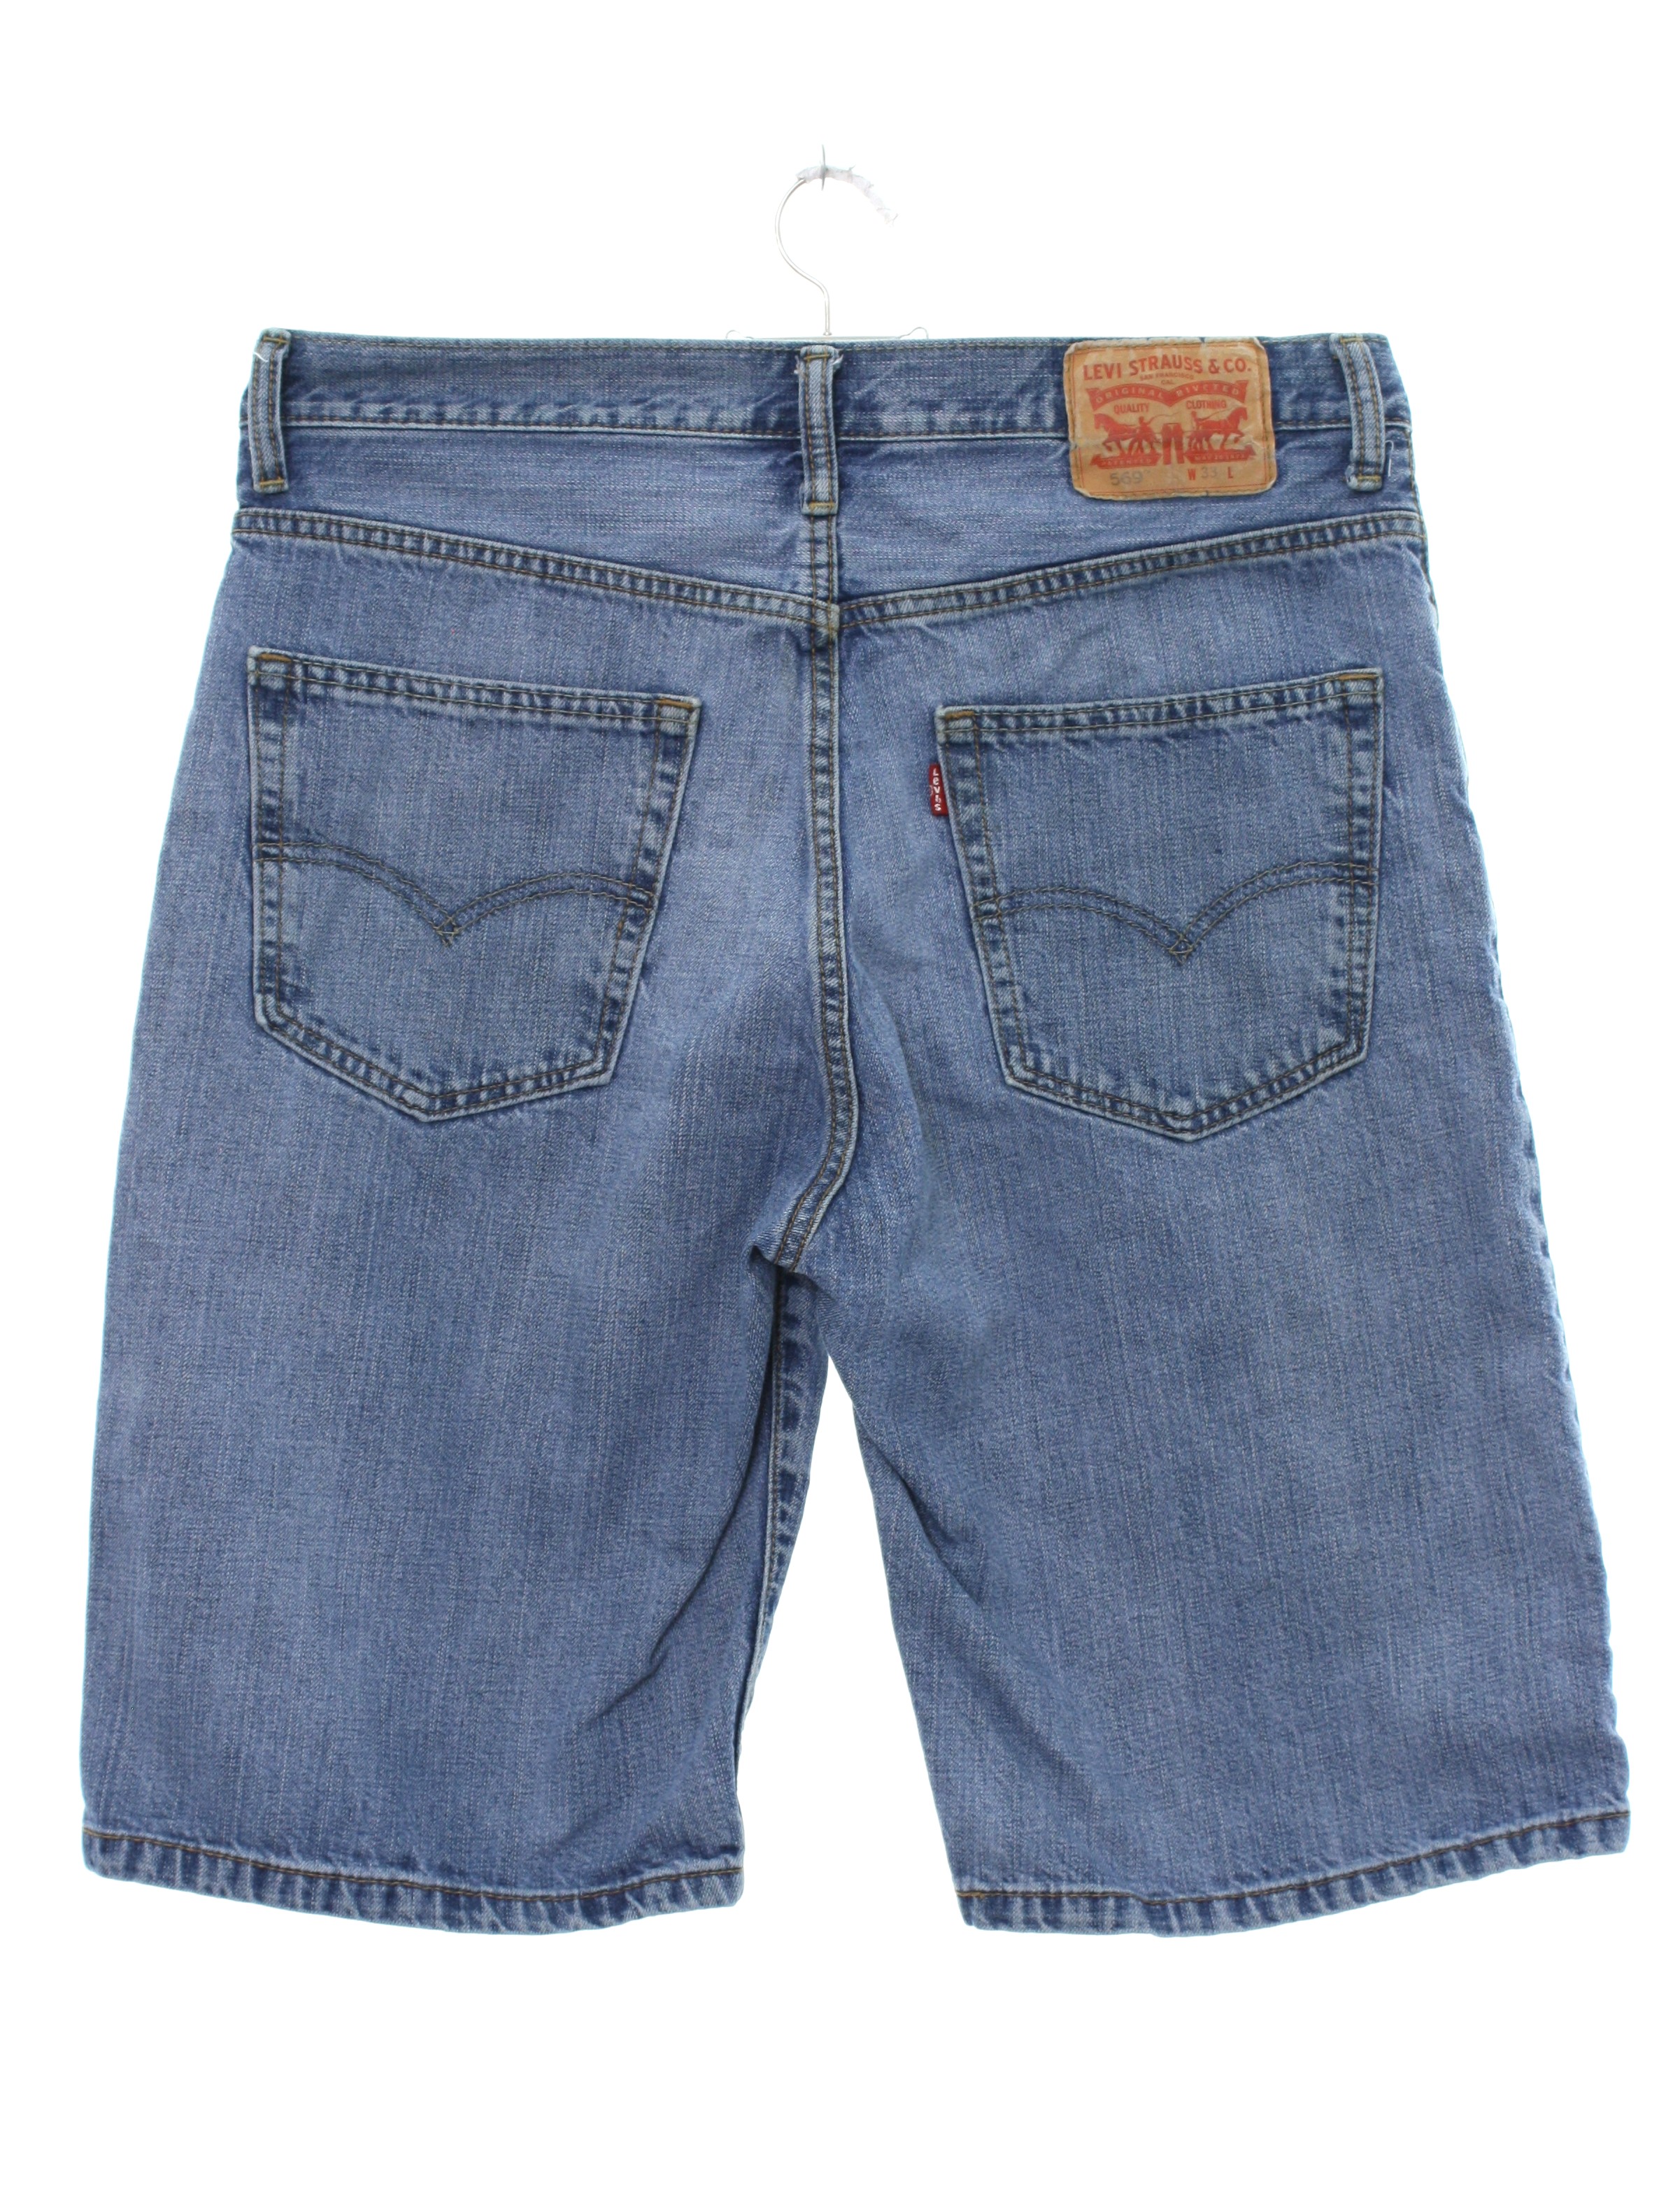 levi 569 jean shorts